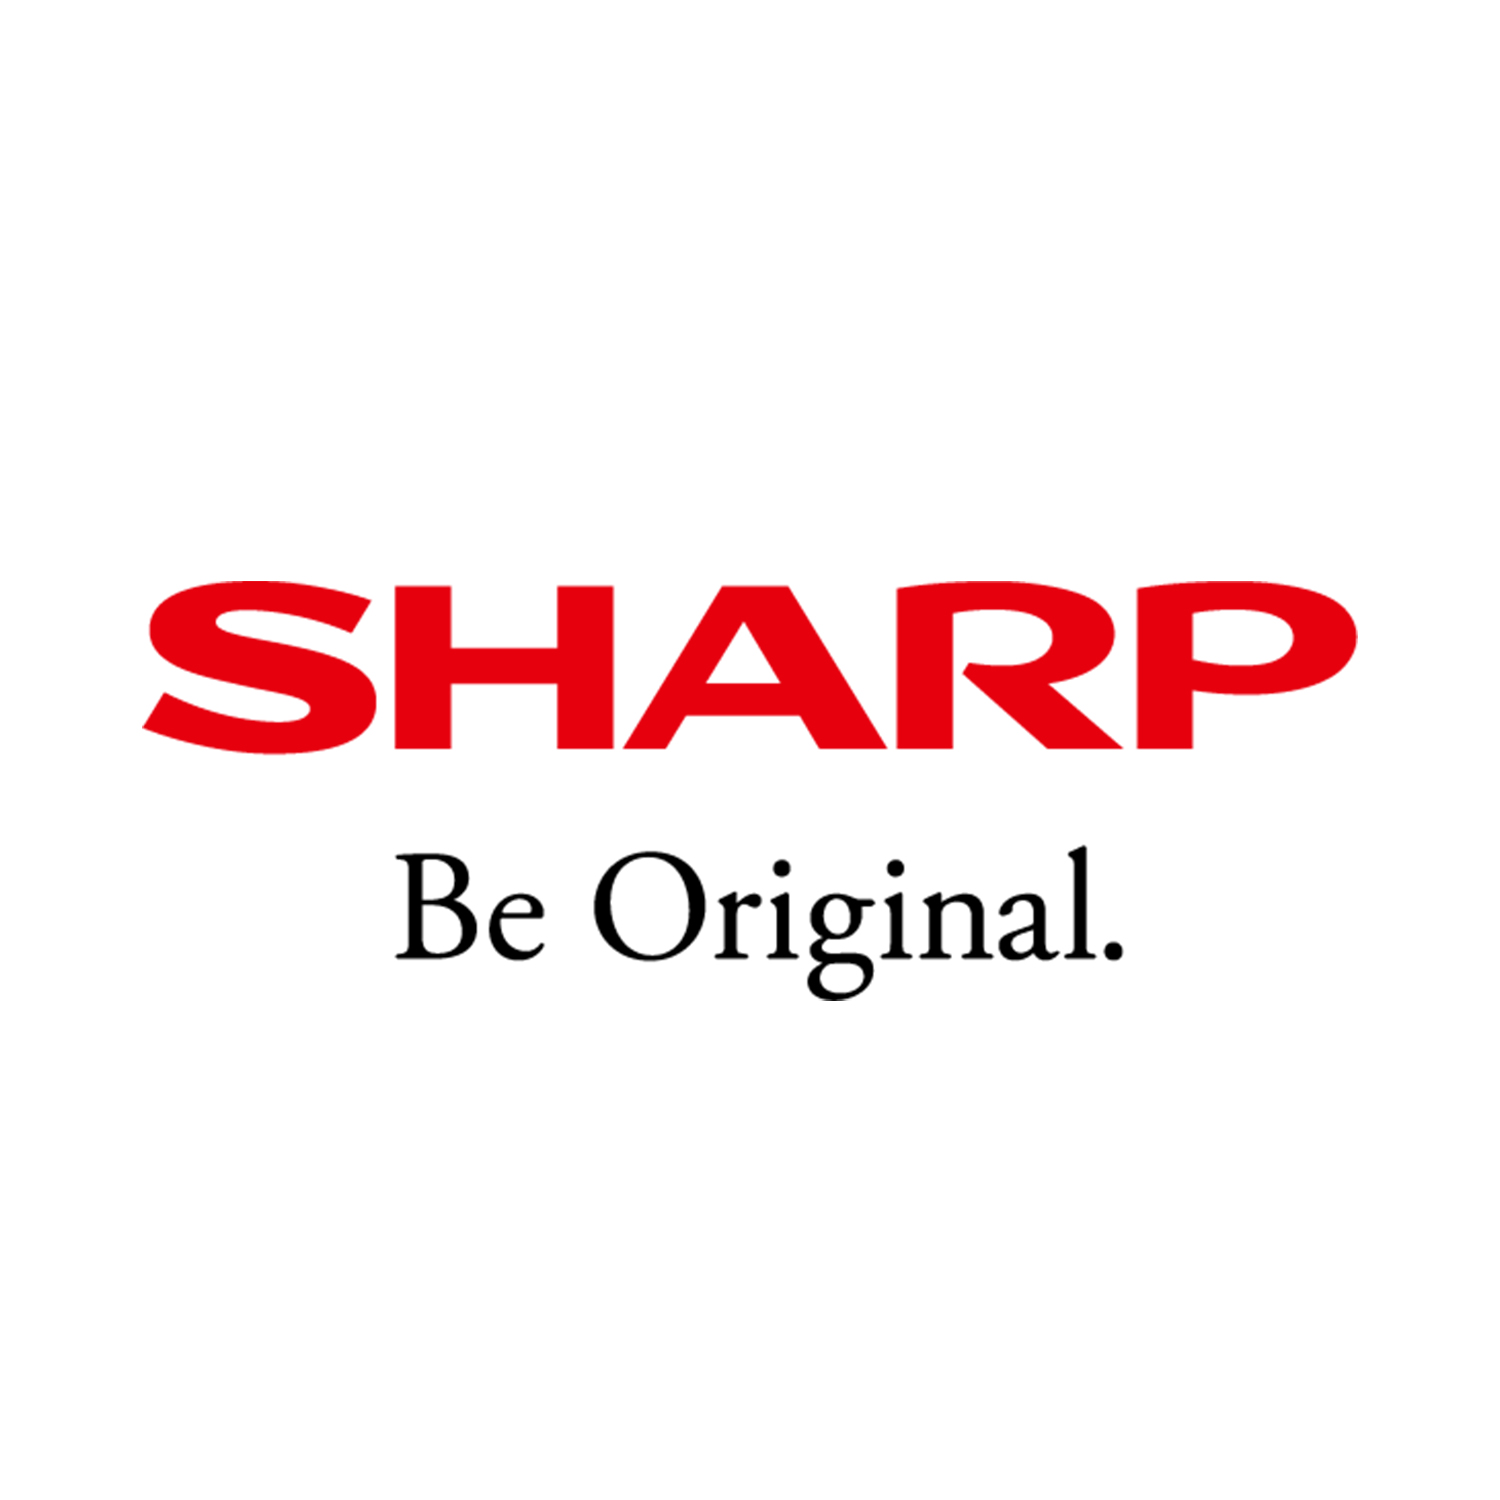 (c) Sharpconsumer.com